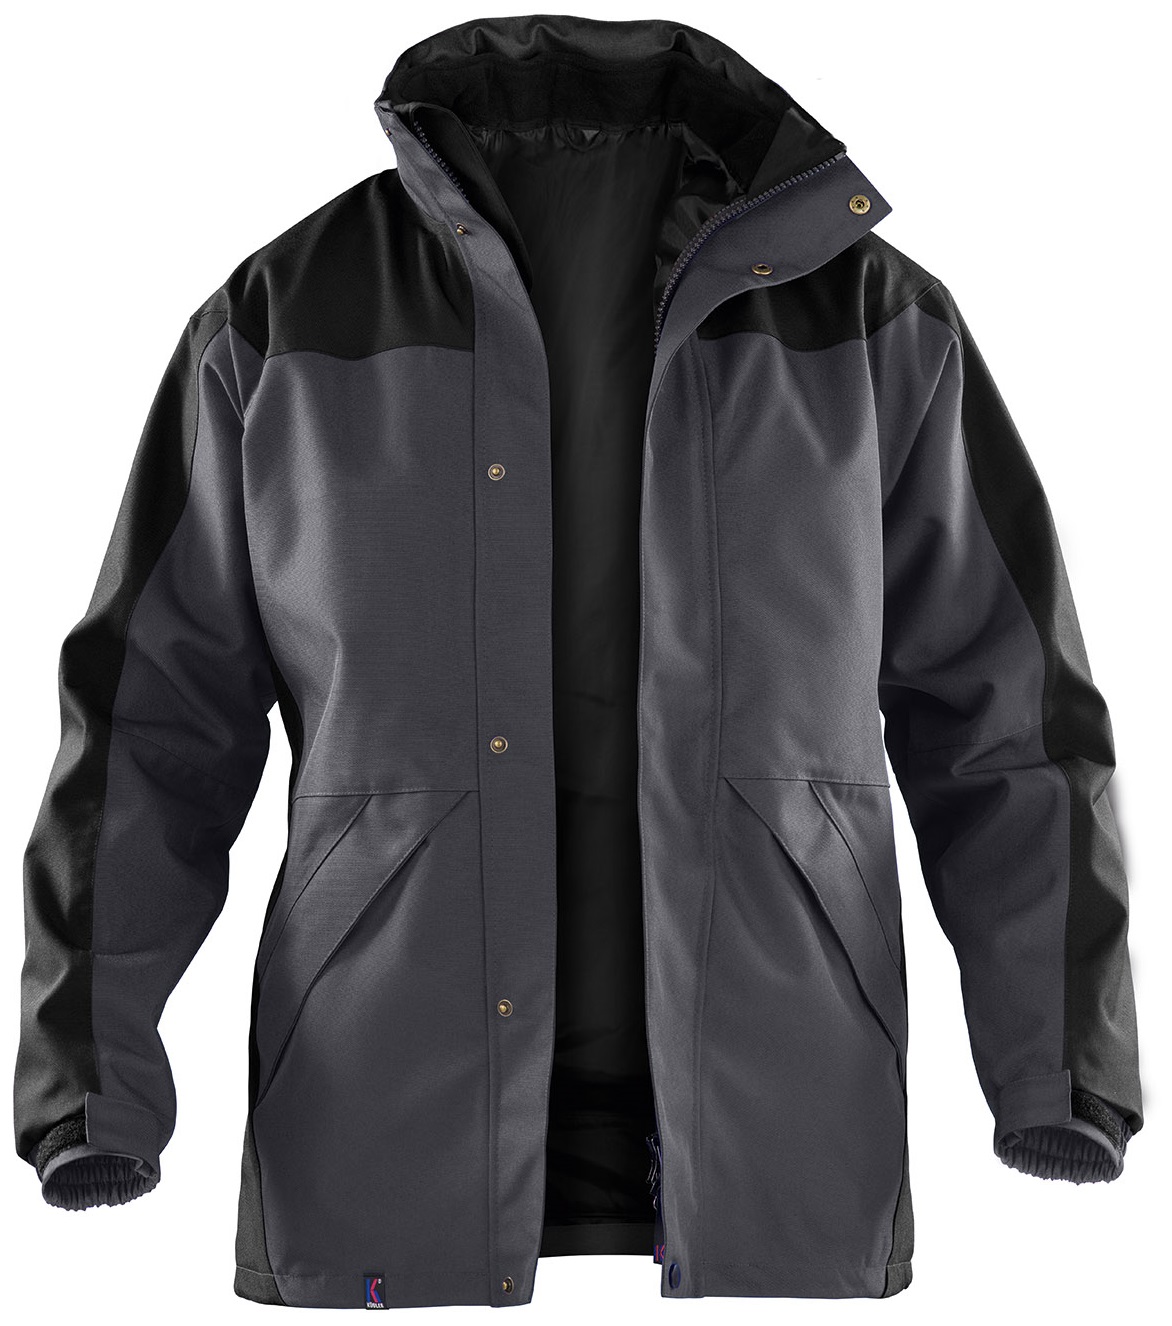 KÜBLER-Regenschutz, Doppel-Jacke, Wetter-Regen-Nässe-Schutz, Dress Inno Plus, anthrazit/schwarz